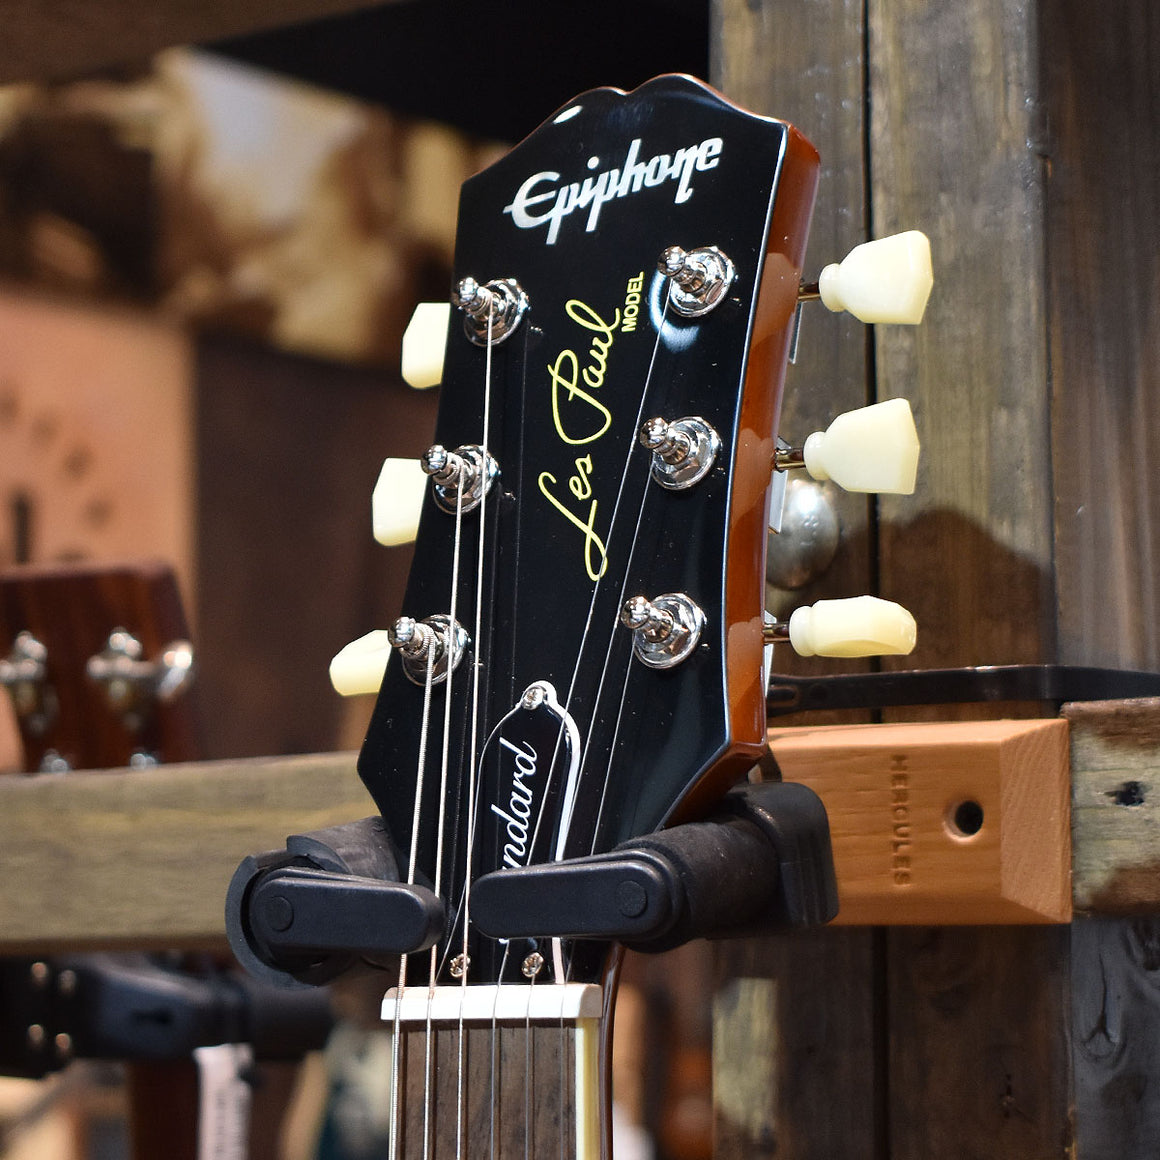 Epiphone Les Paul Standard 50s Electric Guitar Metallic Gold